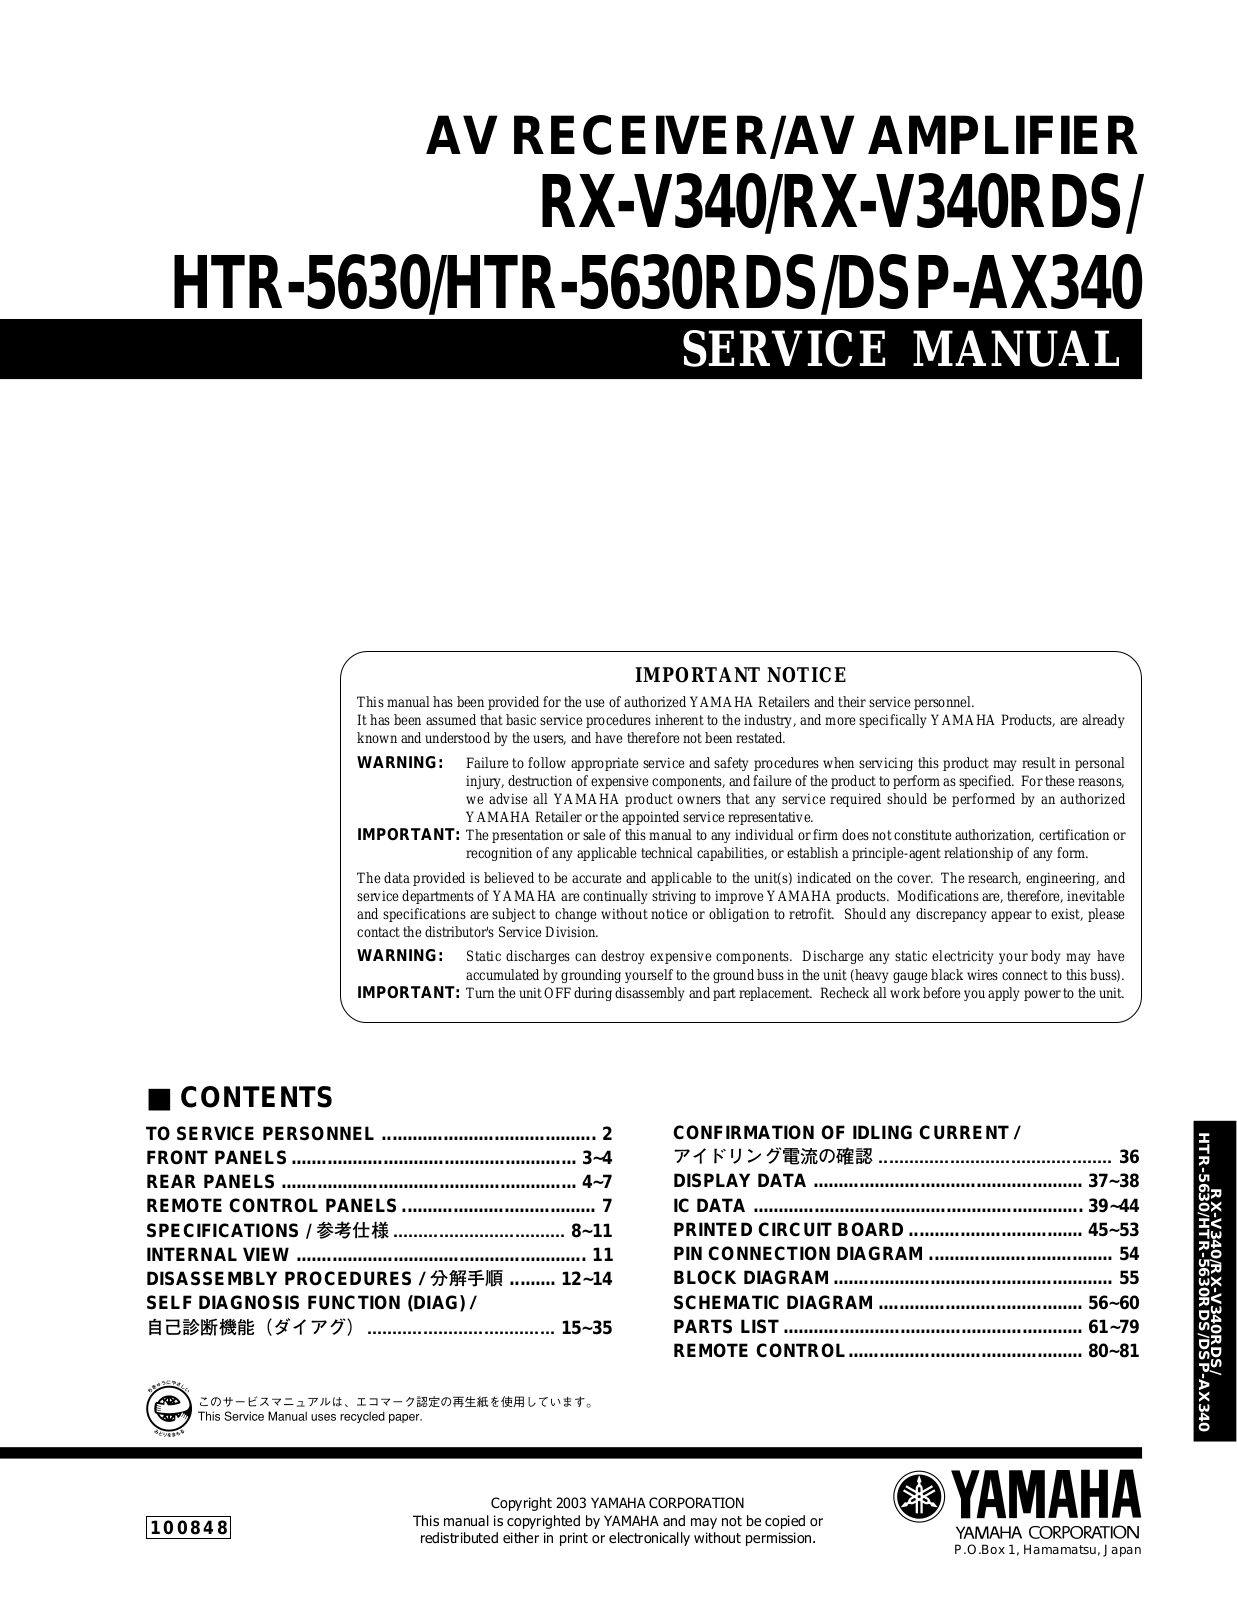 Yamaha RXV-340, RXV-340-RDS, DSPAX-340, HTR-5630, HTR-5630-RDS Service manual